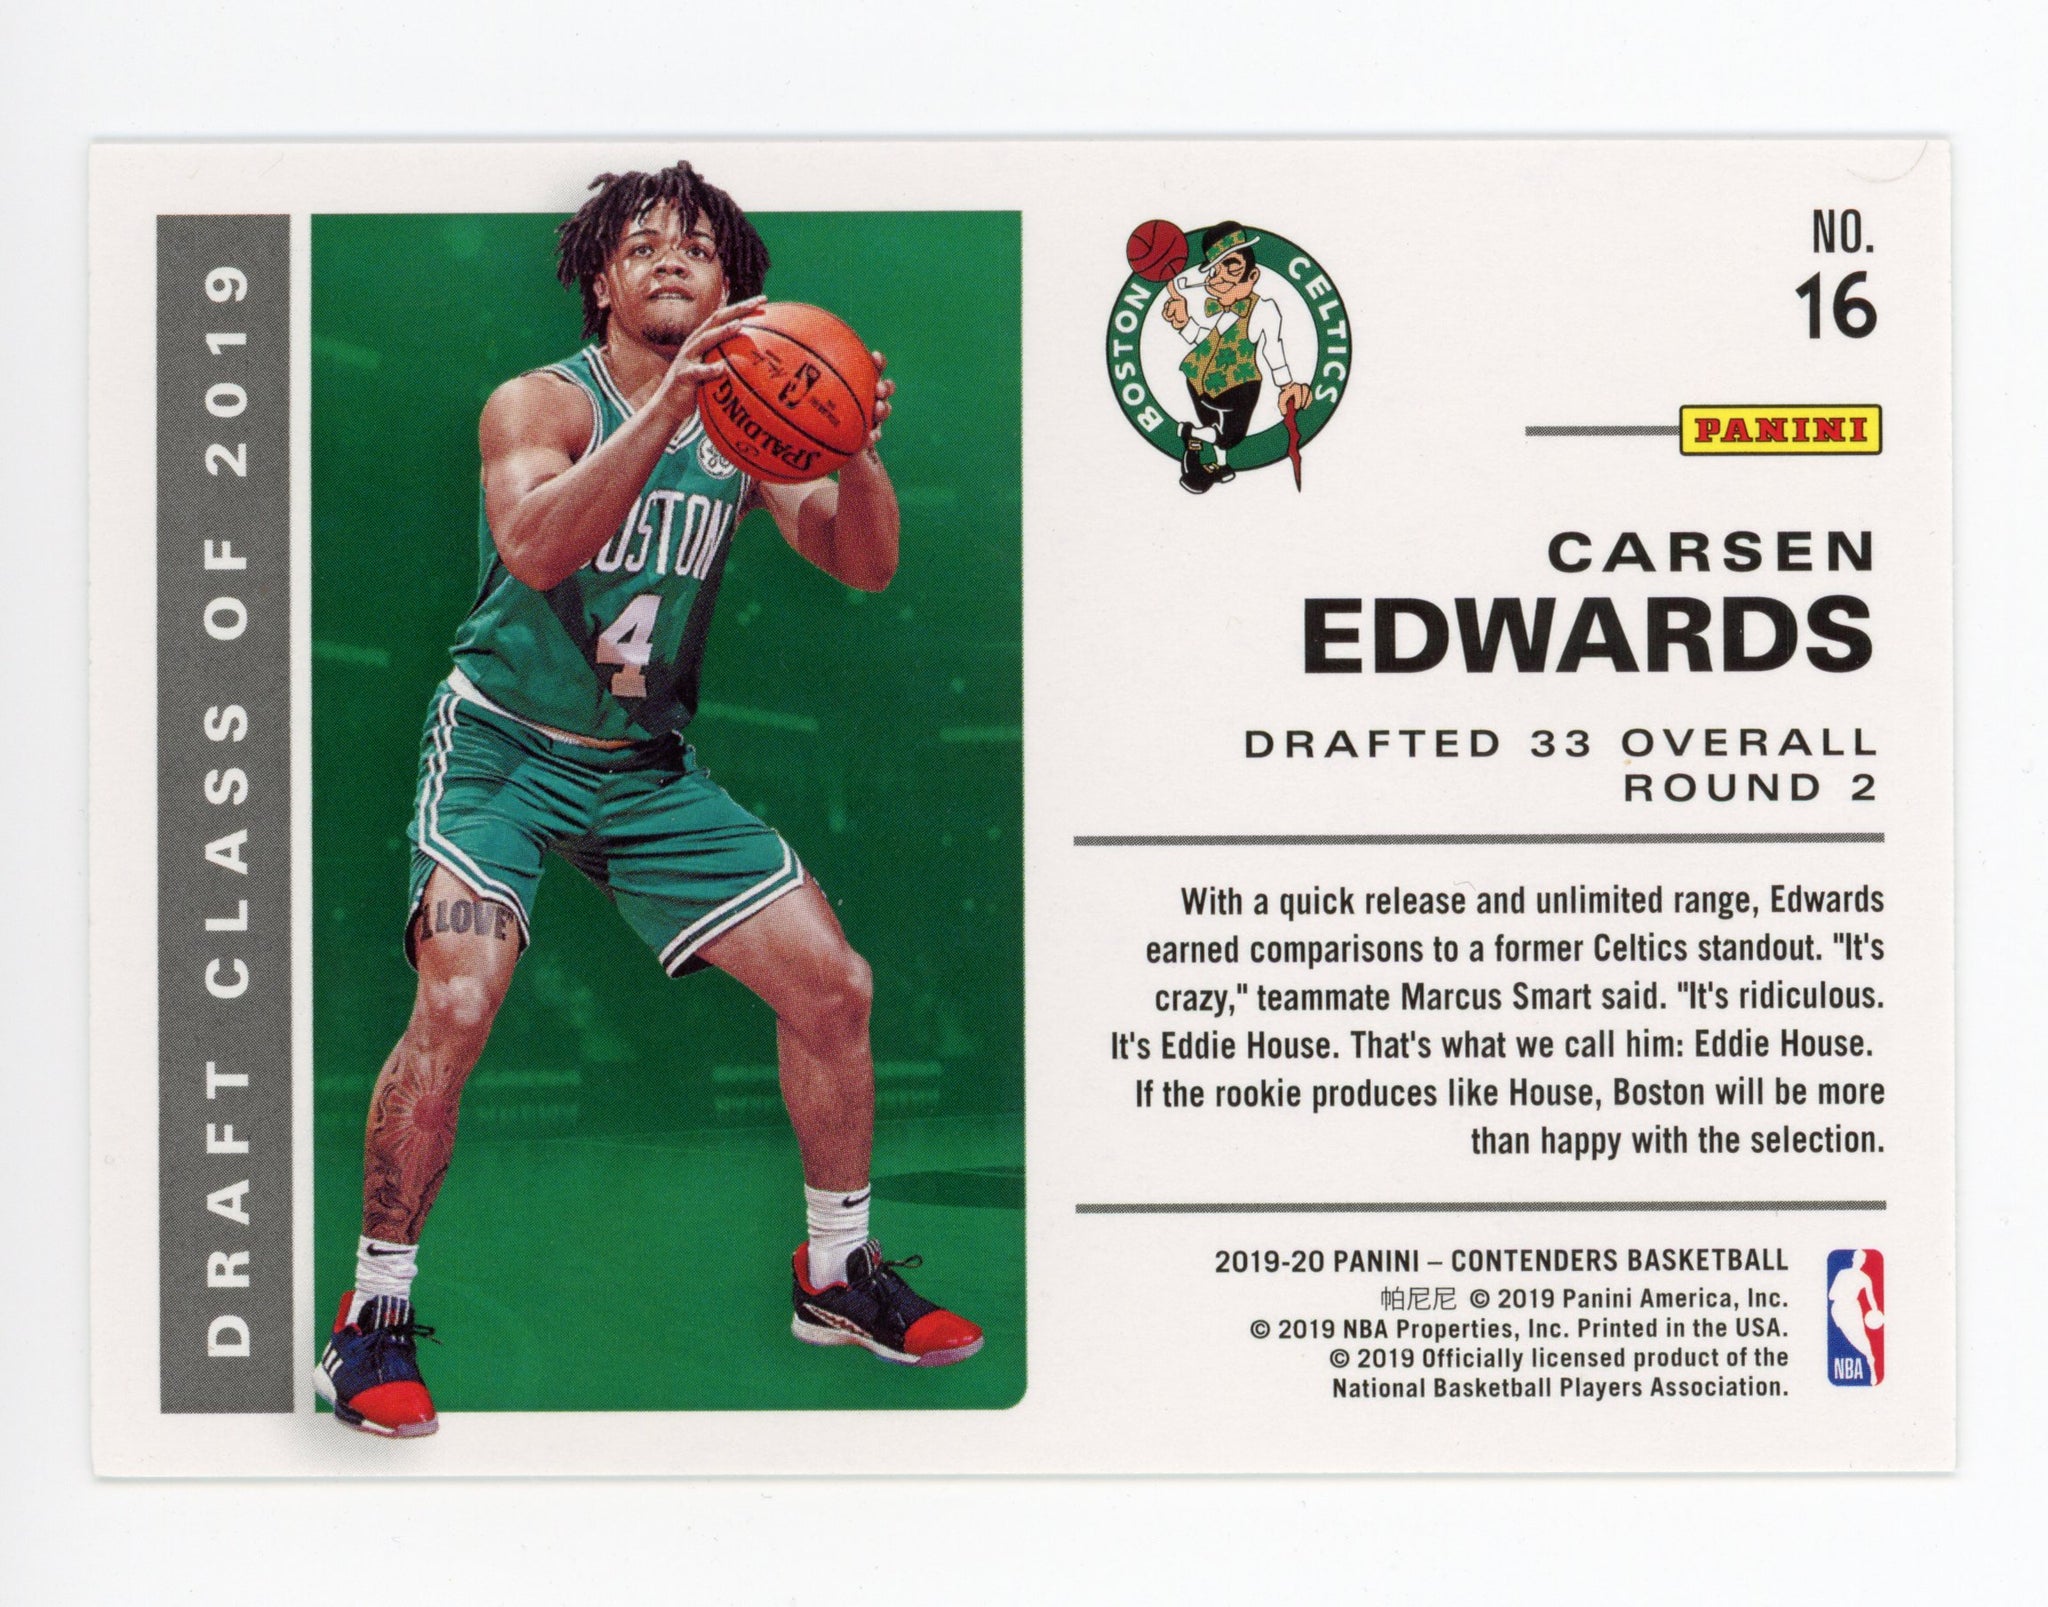 2019-2020 Carsen Edwards Draft Class Panini Boston Celtics # 16